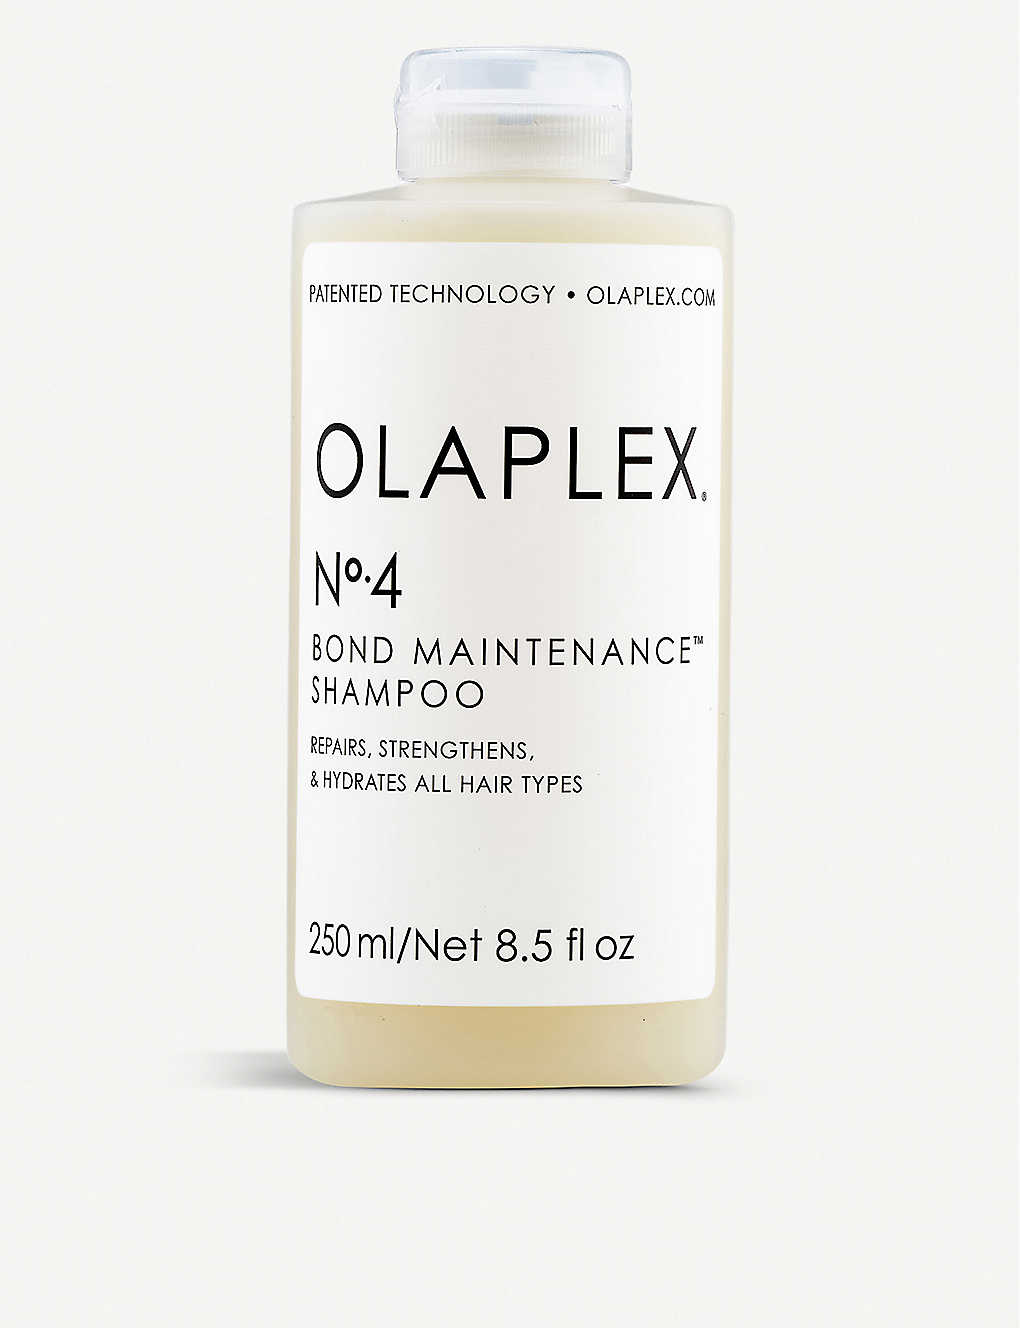 Olaplex No4 - شامبو اولابلكس